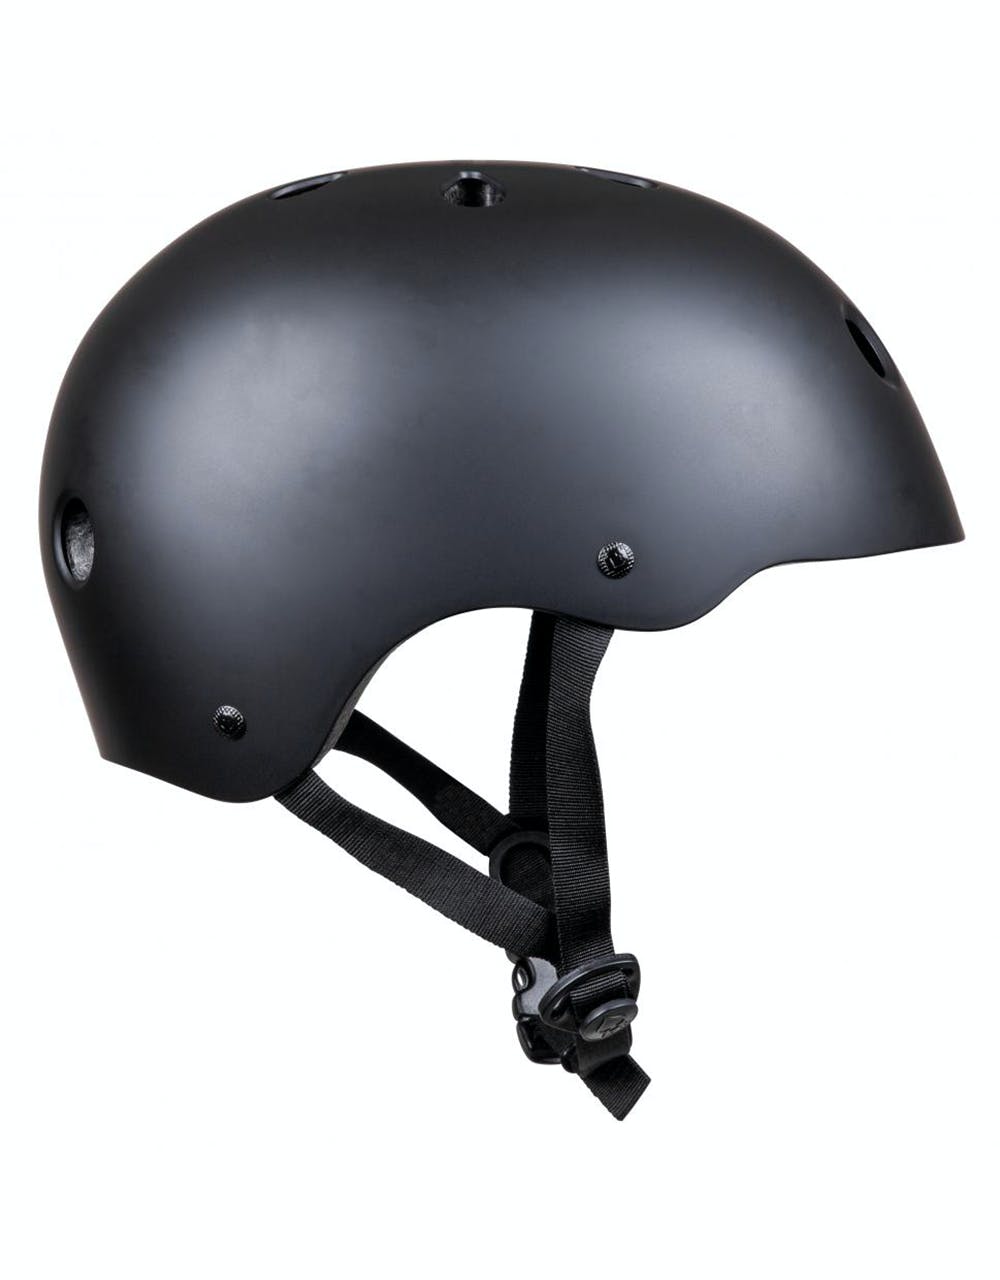 Pro-Tec Prime Helmet - Black